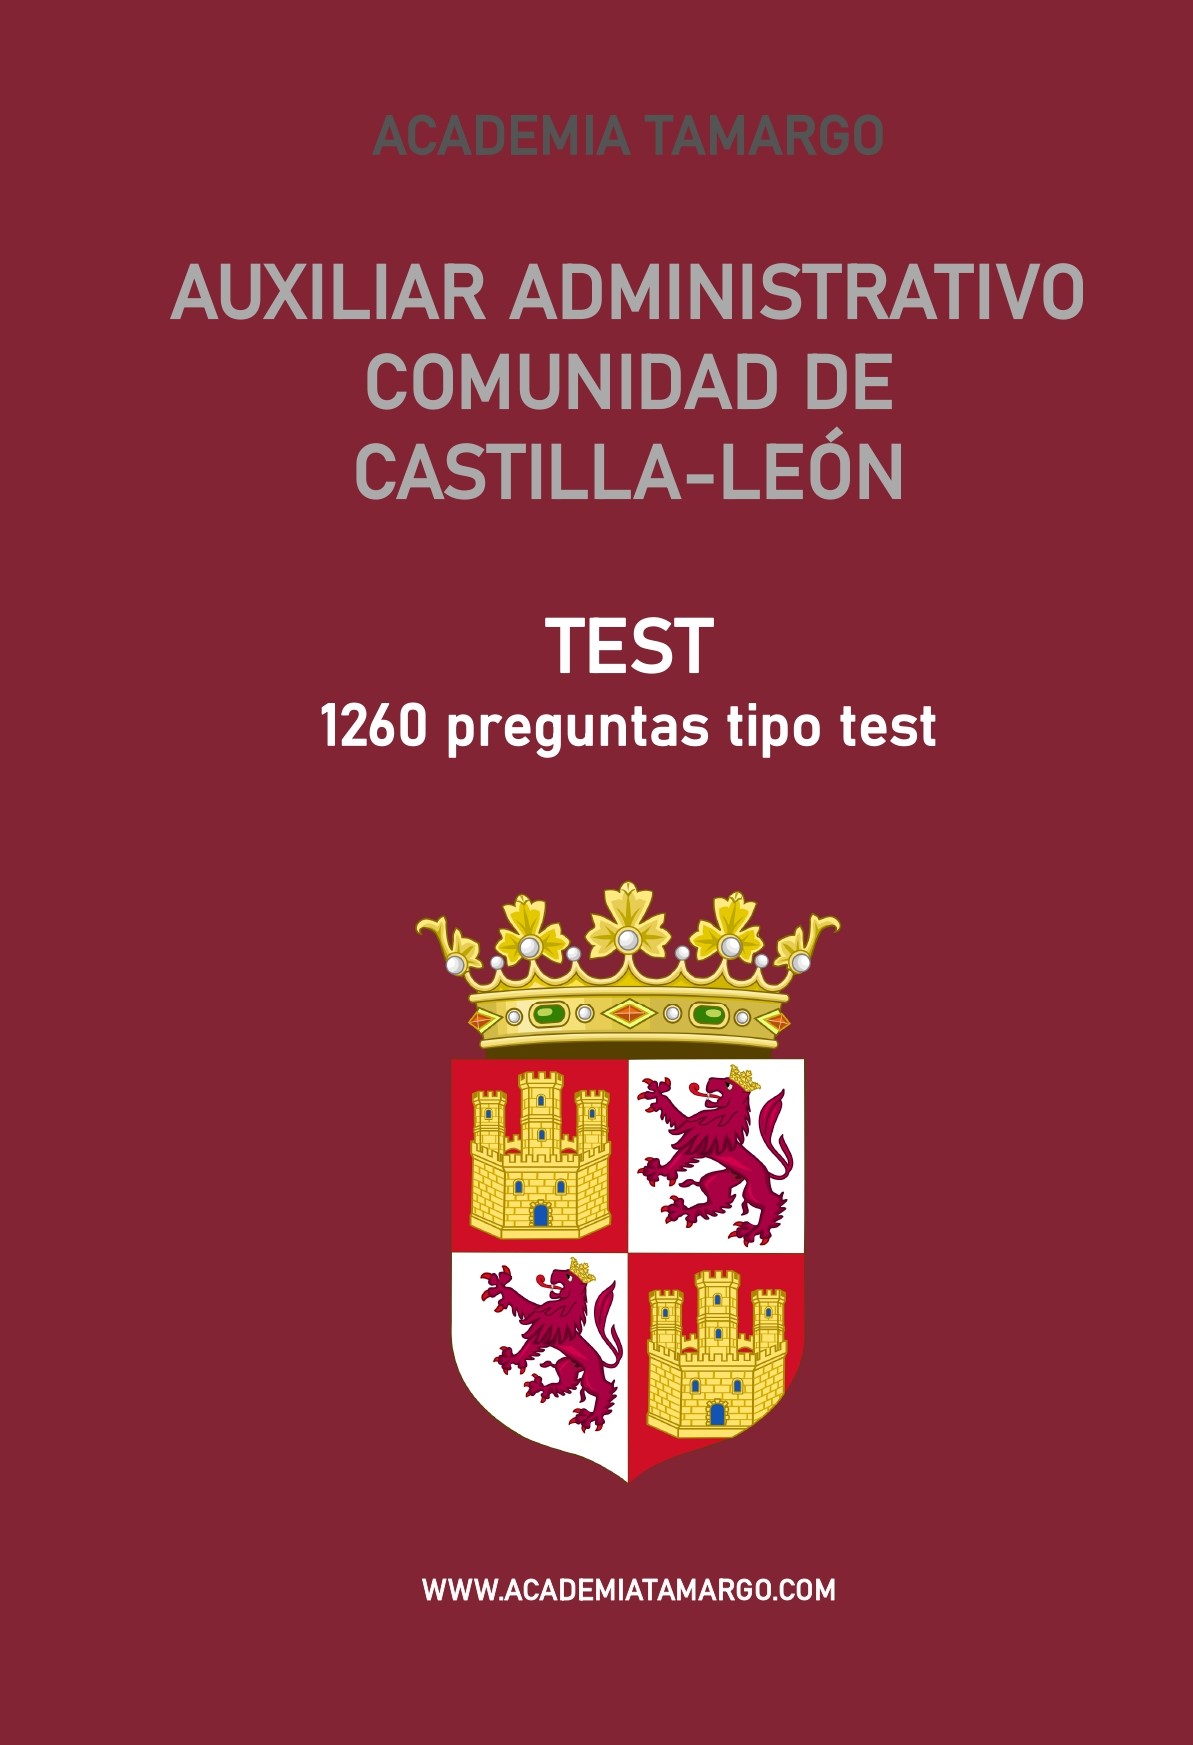 PORTADA TEST AUXILIAR ADMINISTRATIVO CASTILLA Y LEON_page-0001